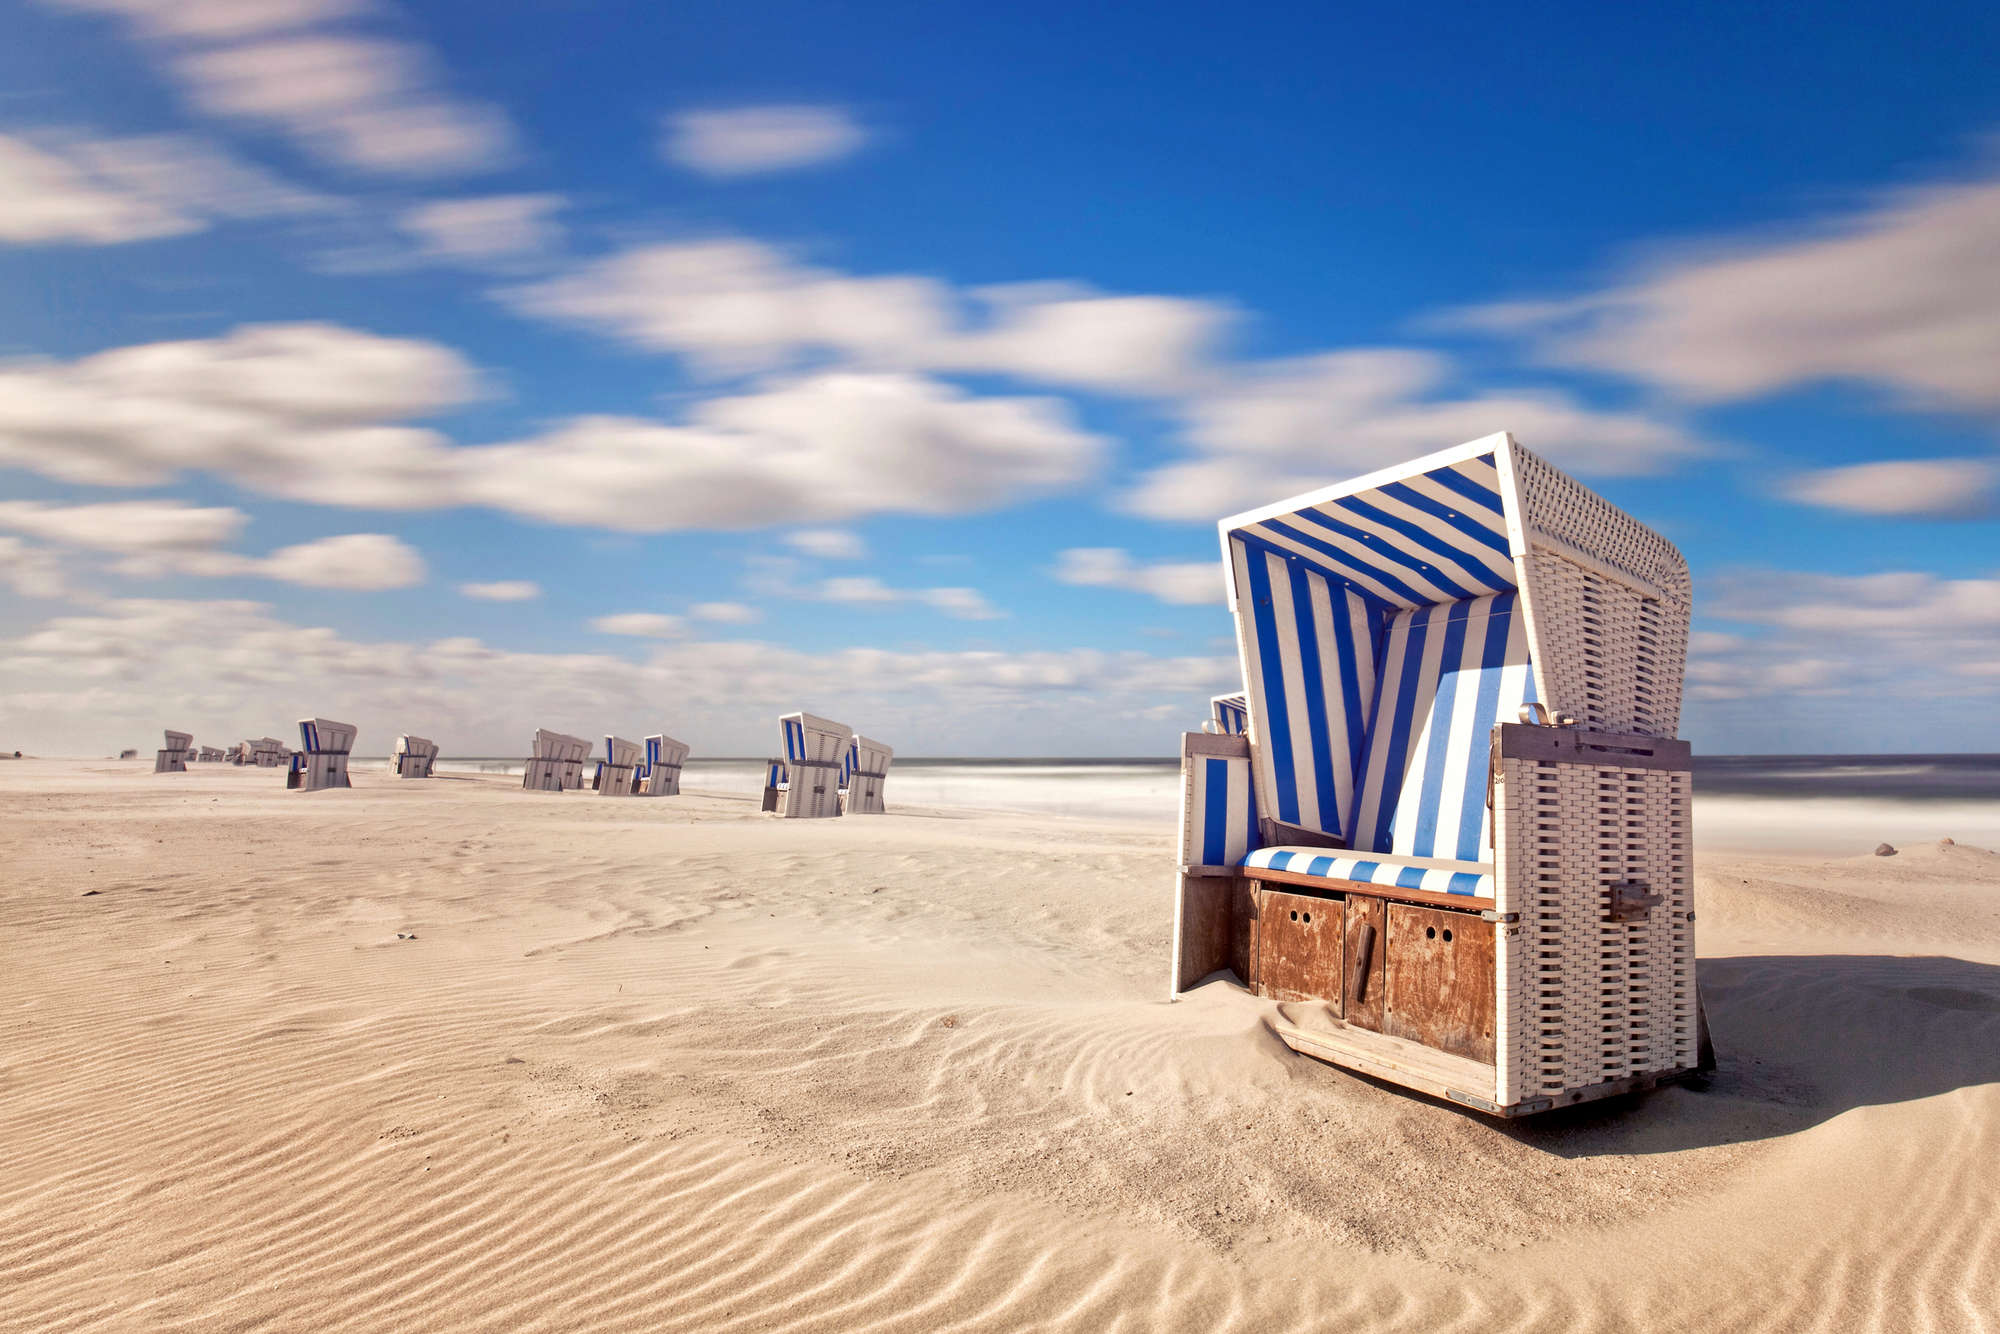             Beach mural beach chairs in the sand on premium smooth fleece
        